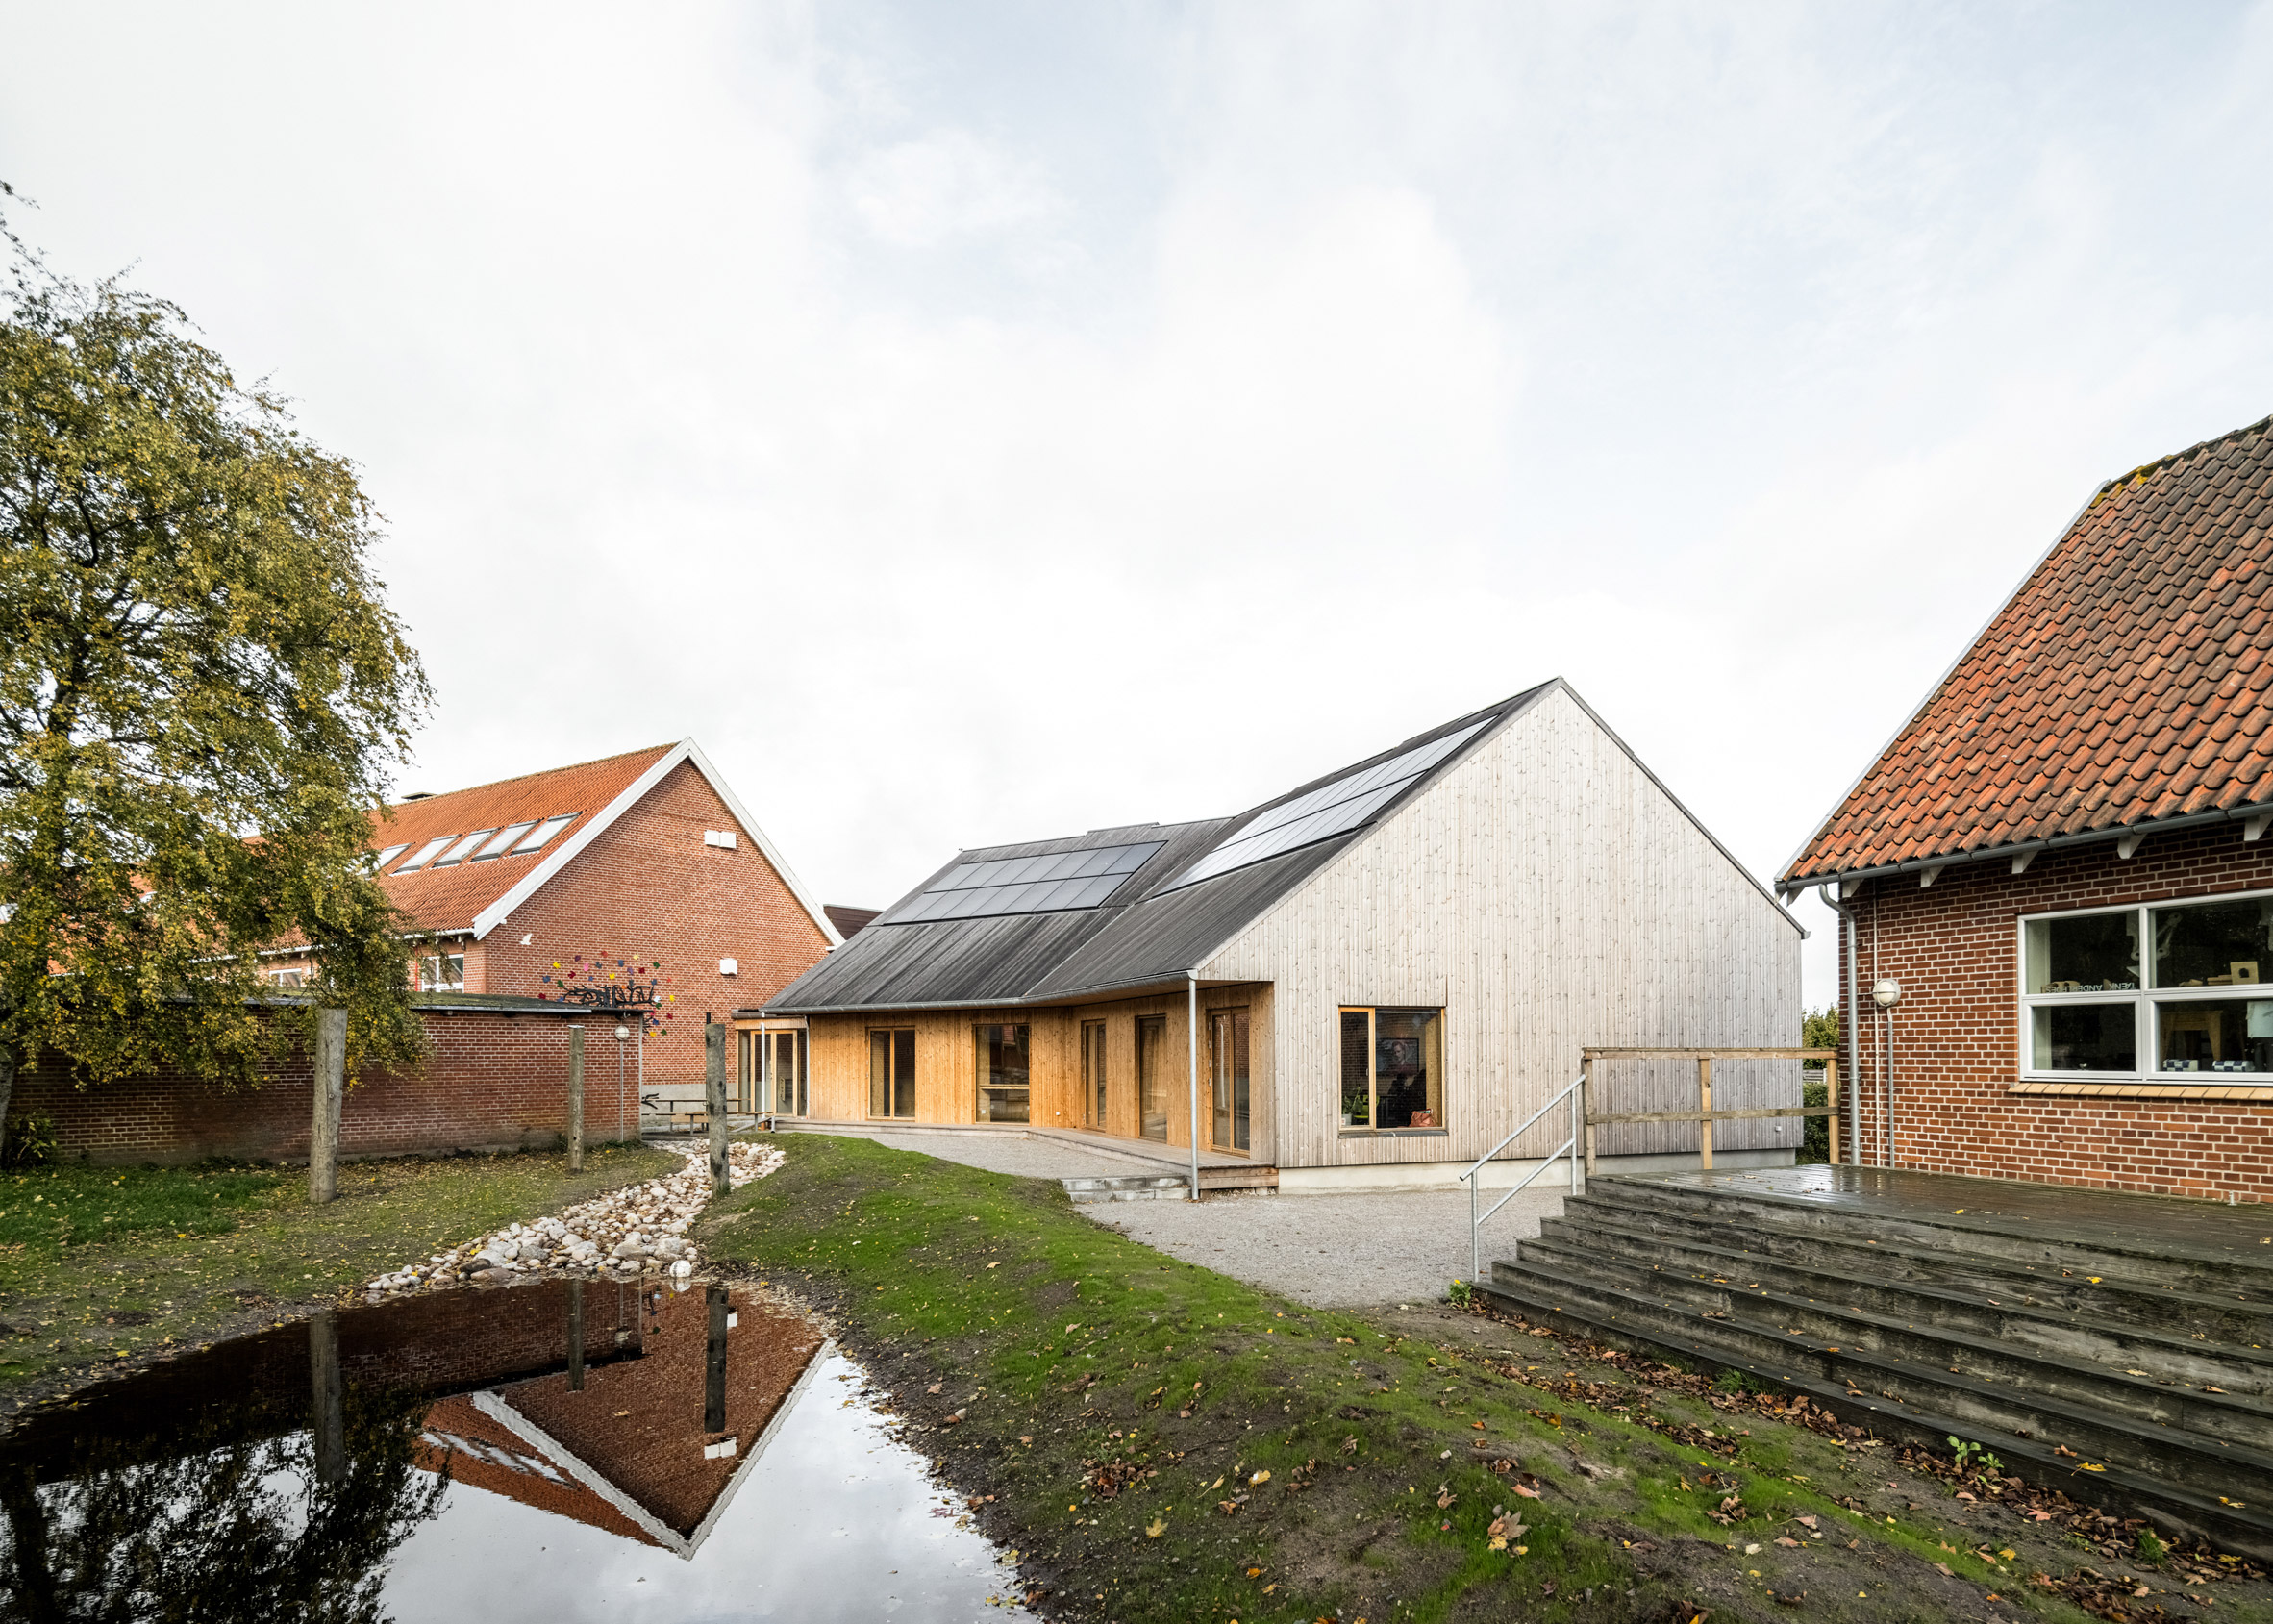 Timber-clad school building